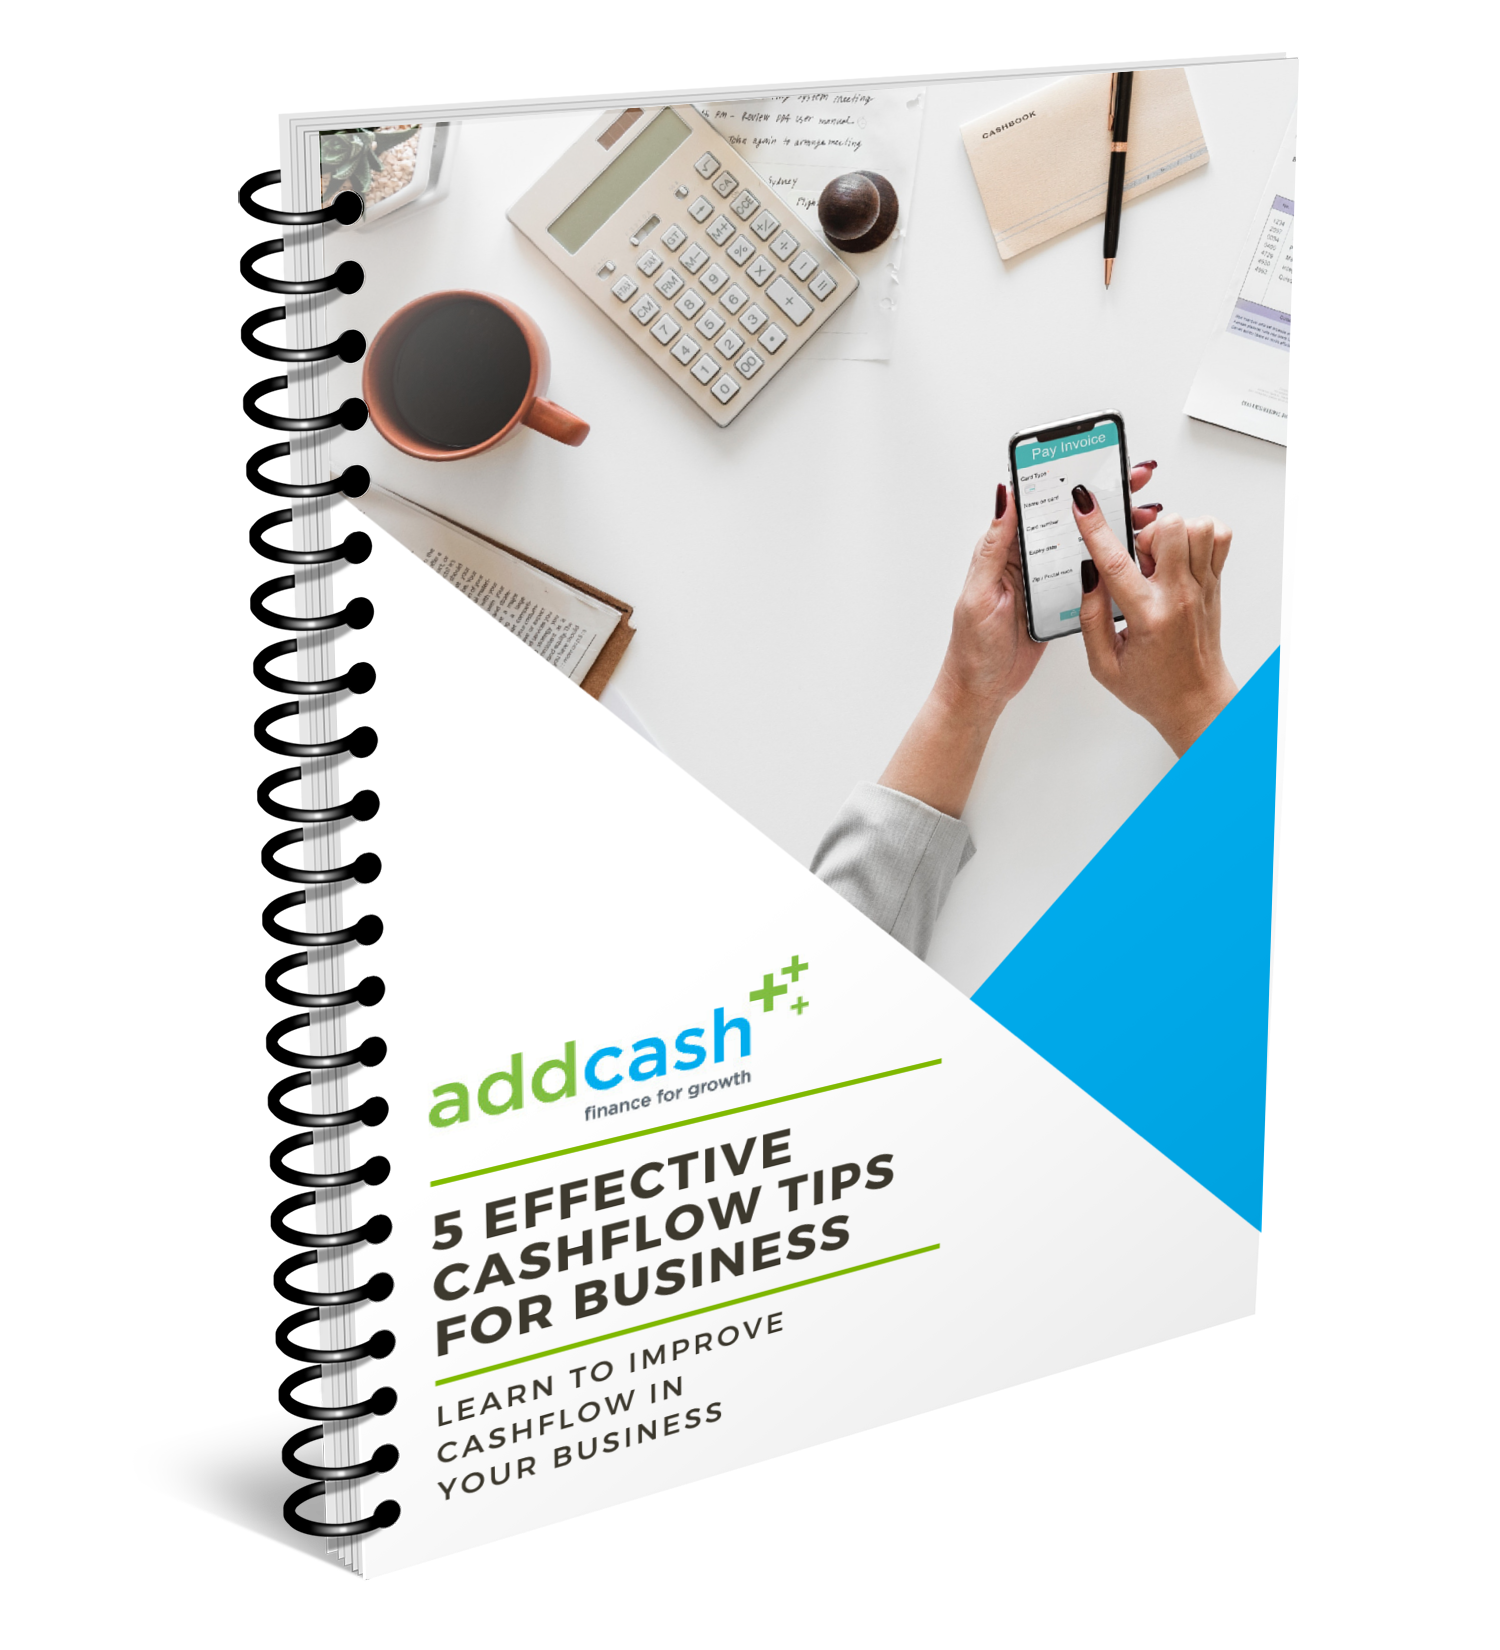 5 Effective Cashflow Tips for Business eBook CTA